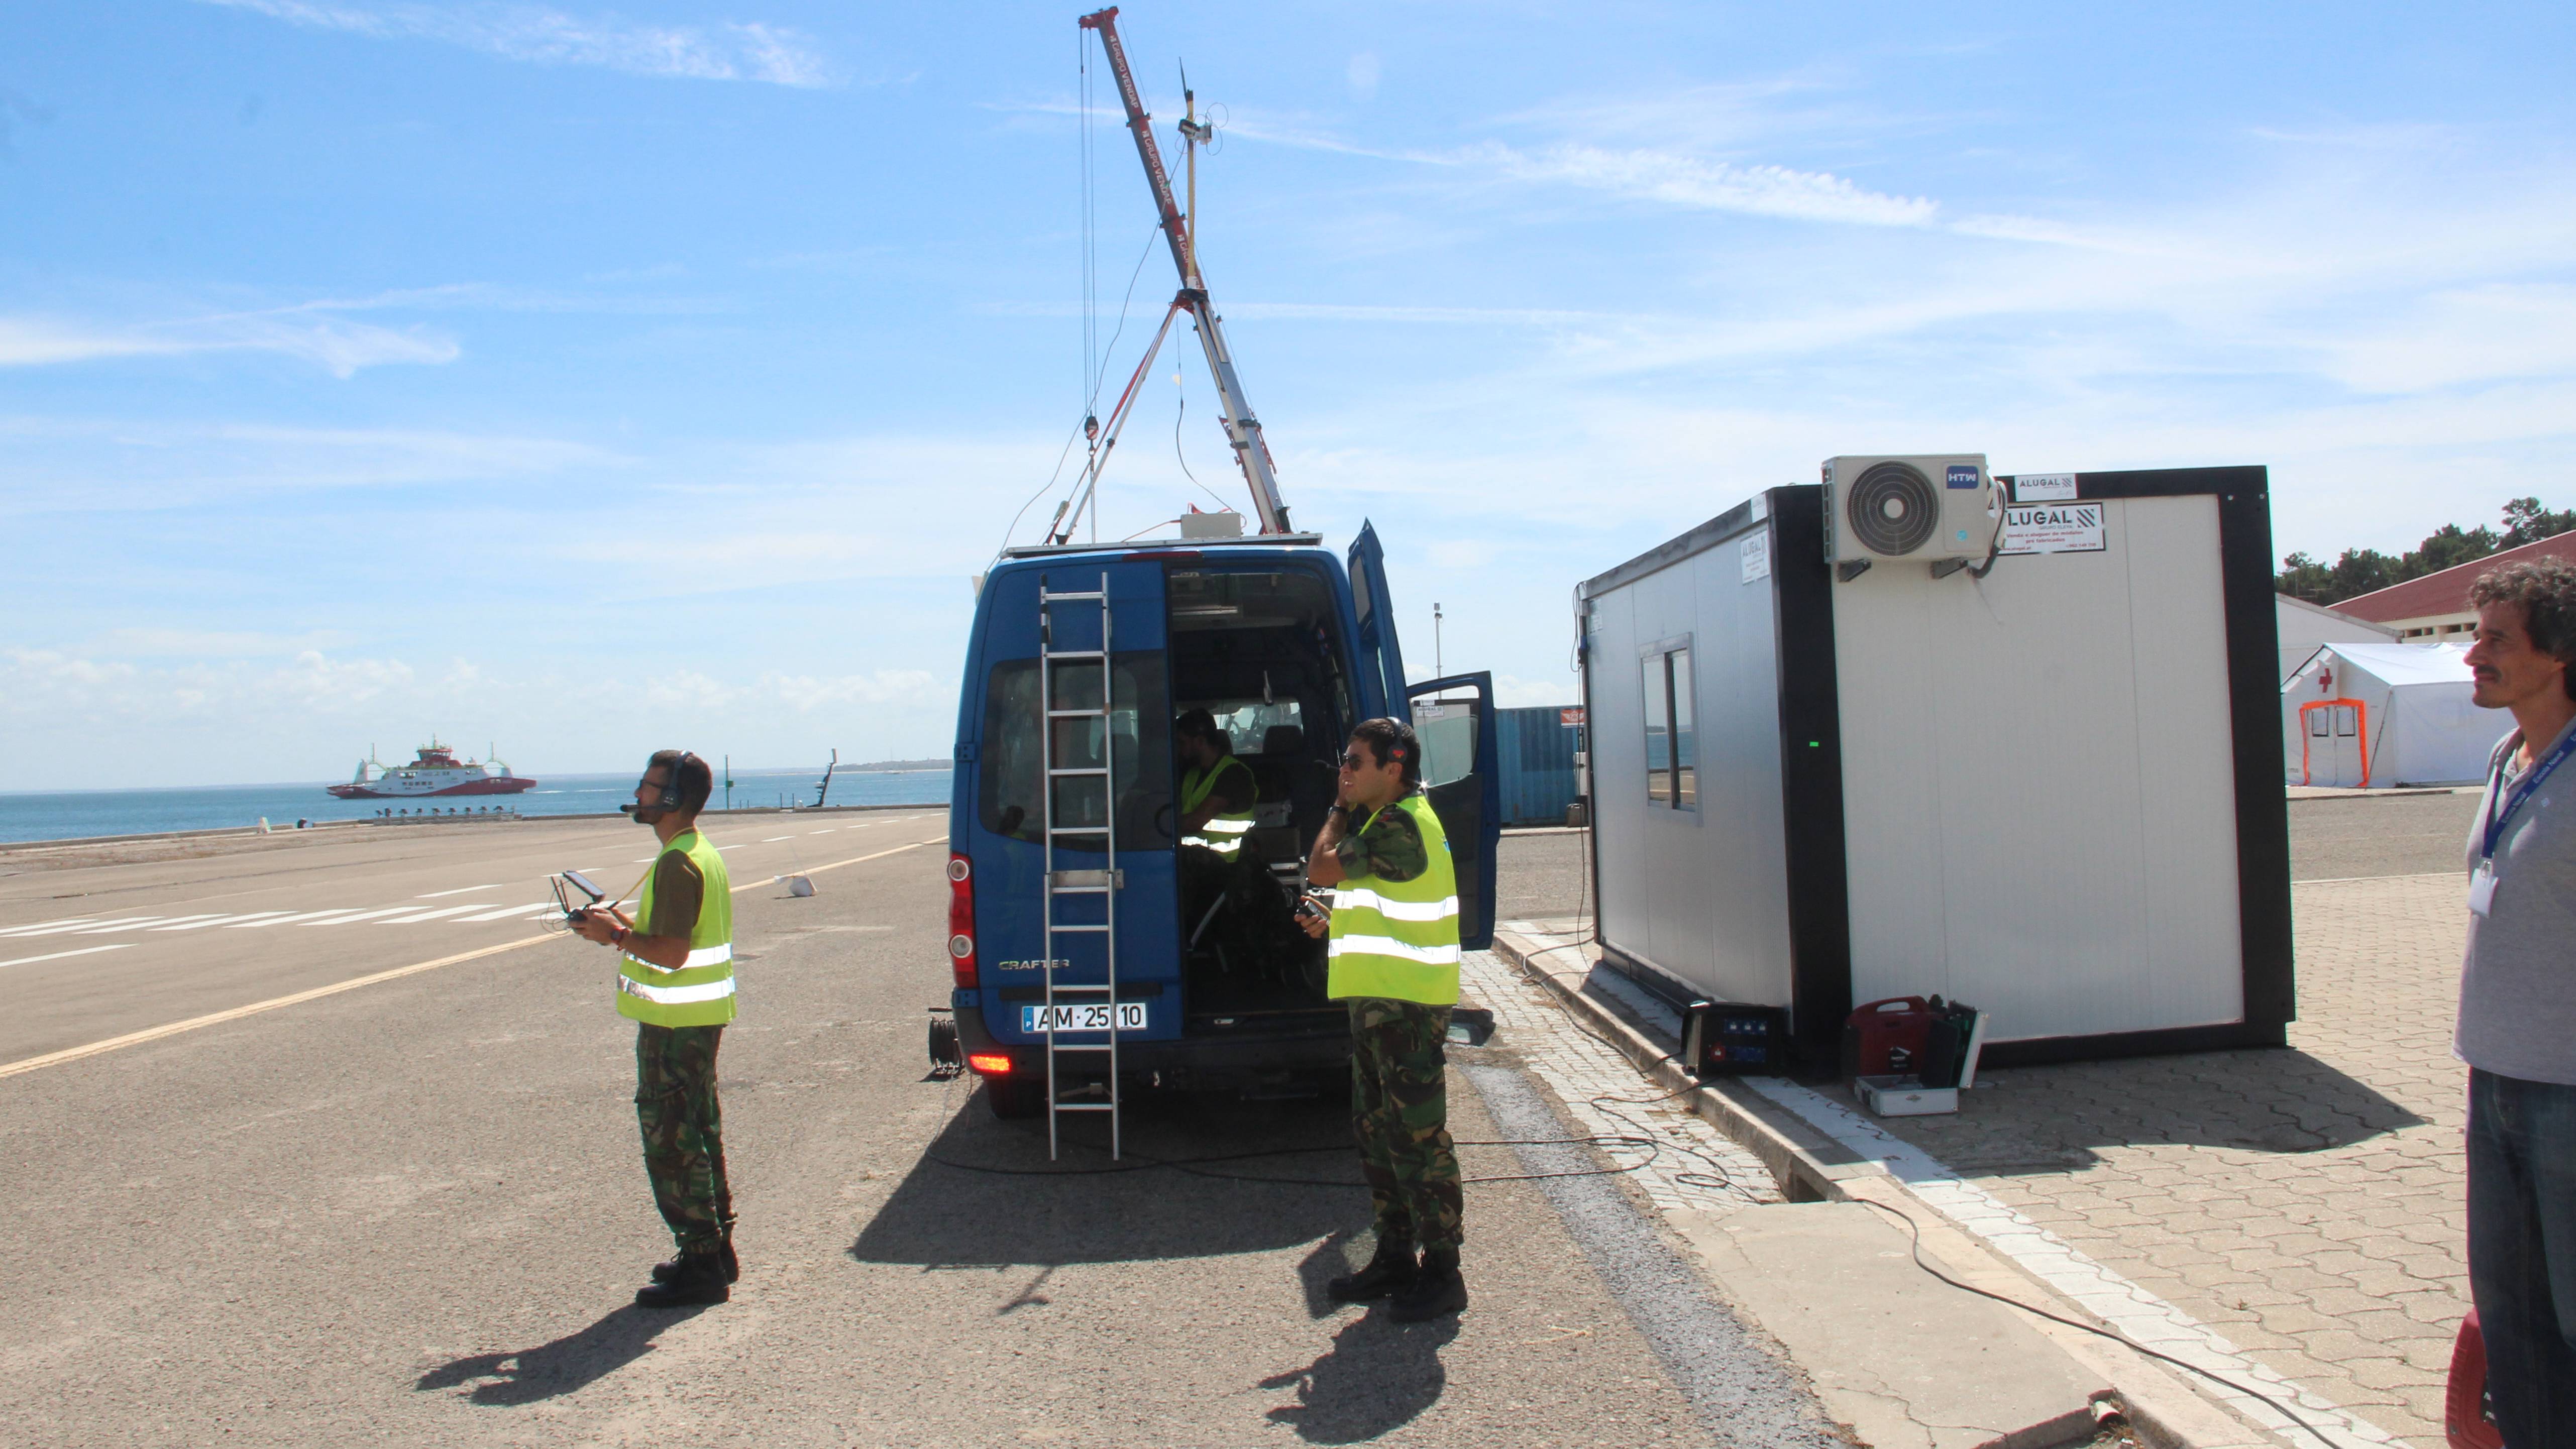 Centro de Investigao da Academia da Fora Area participou no exerccio REX, organizado pela Marinha.